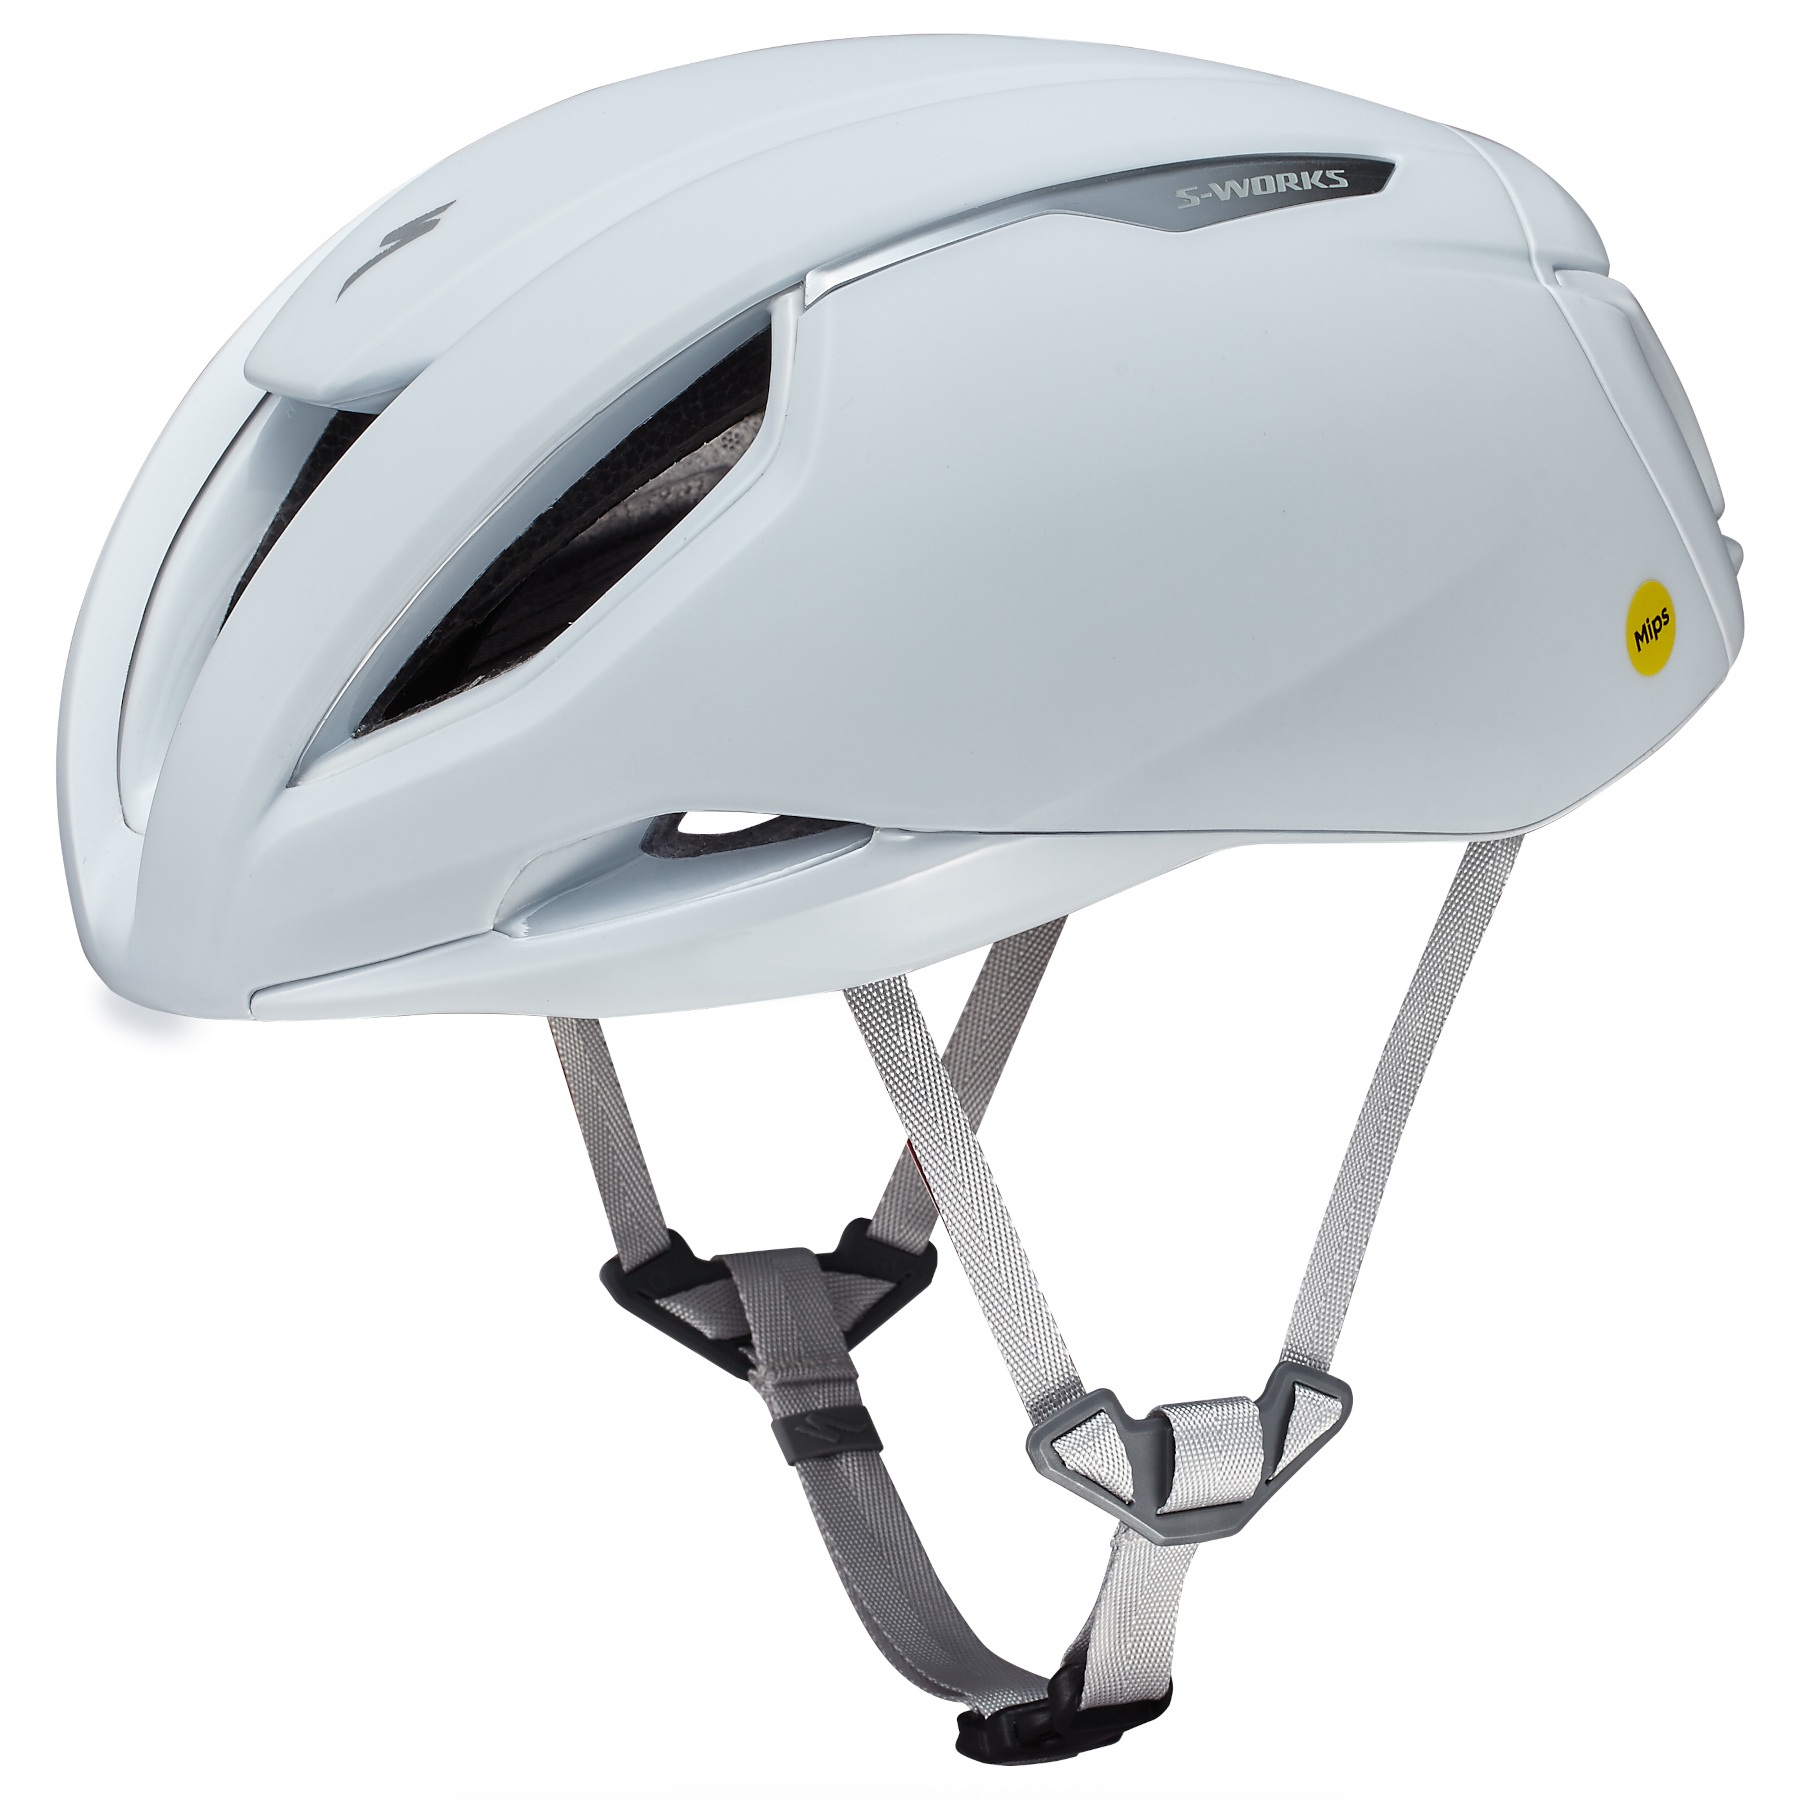 Productfoto van Specialized S-Works Evade 3 Helm Racefietshelm - White